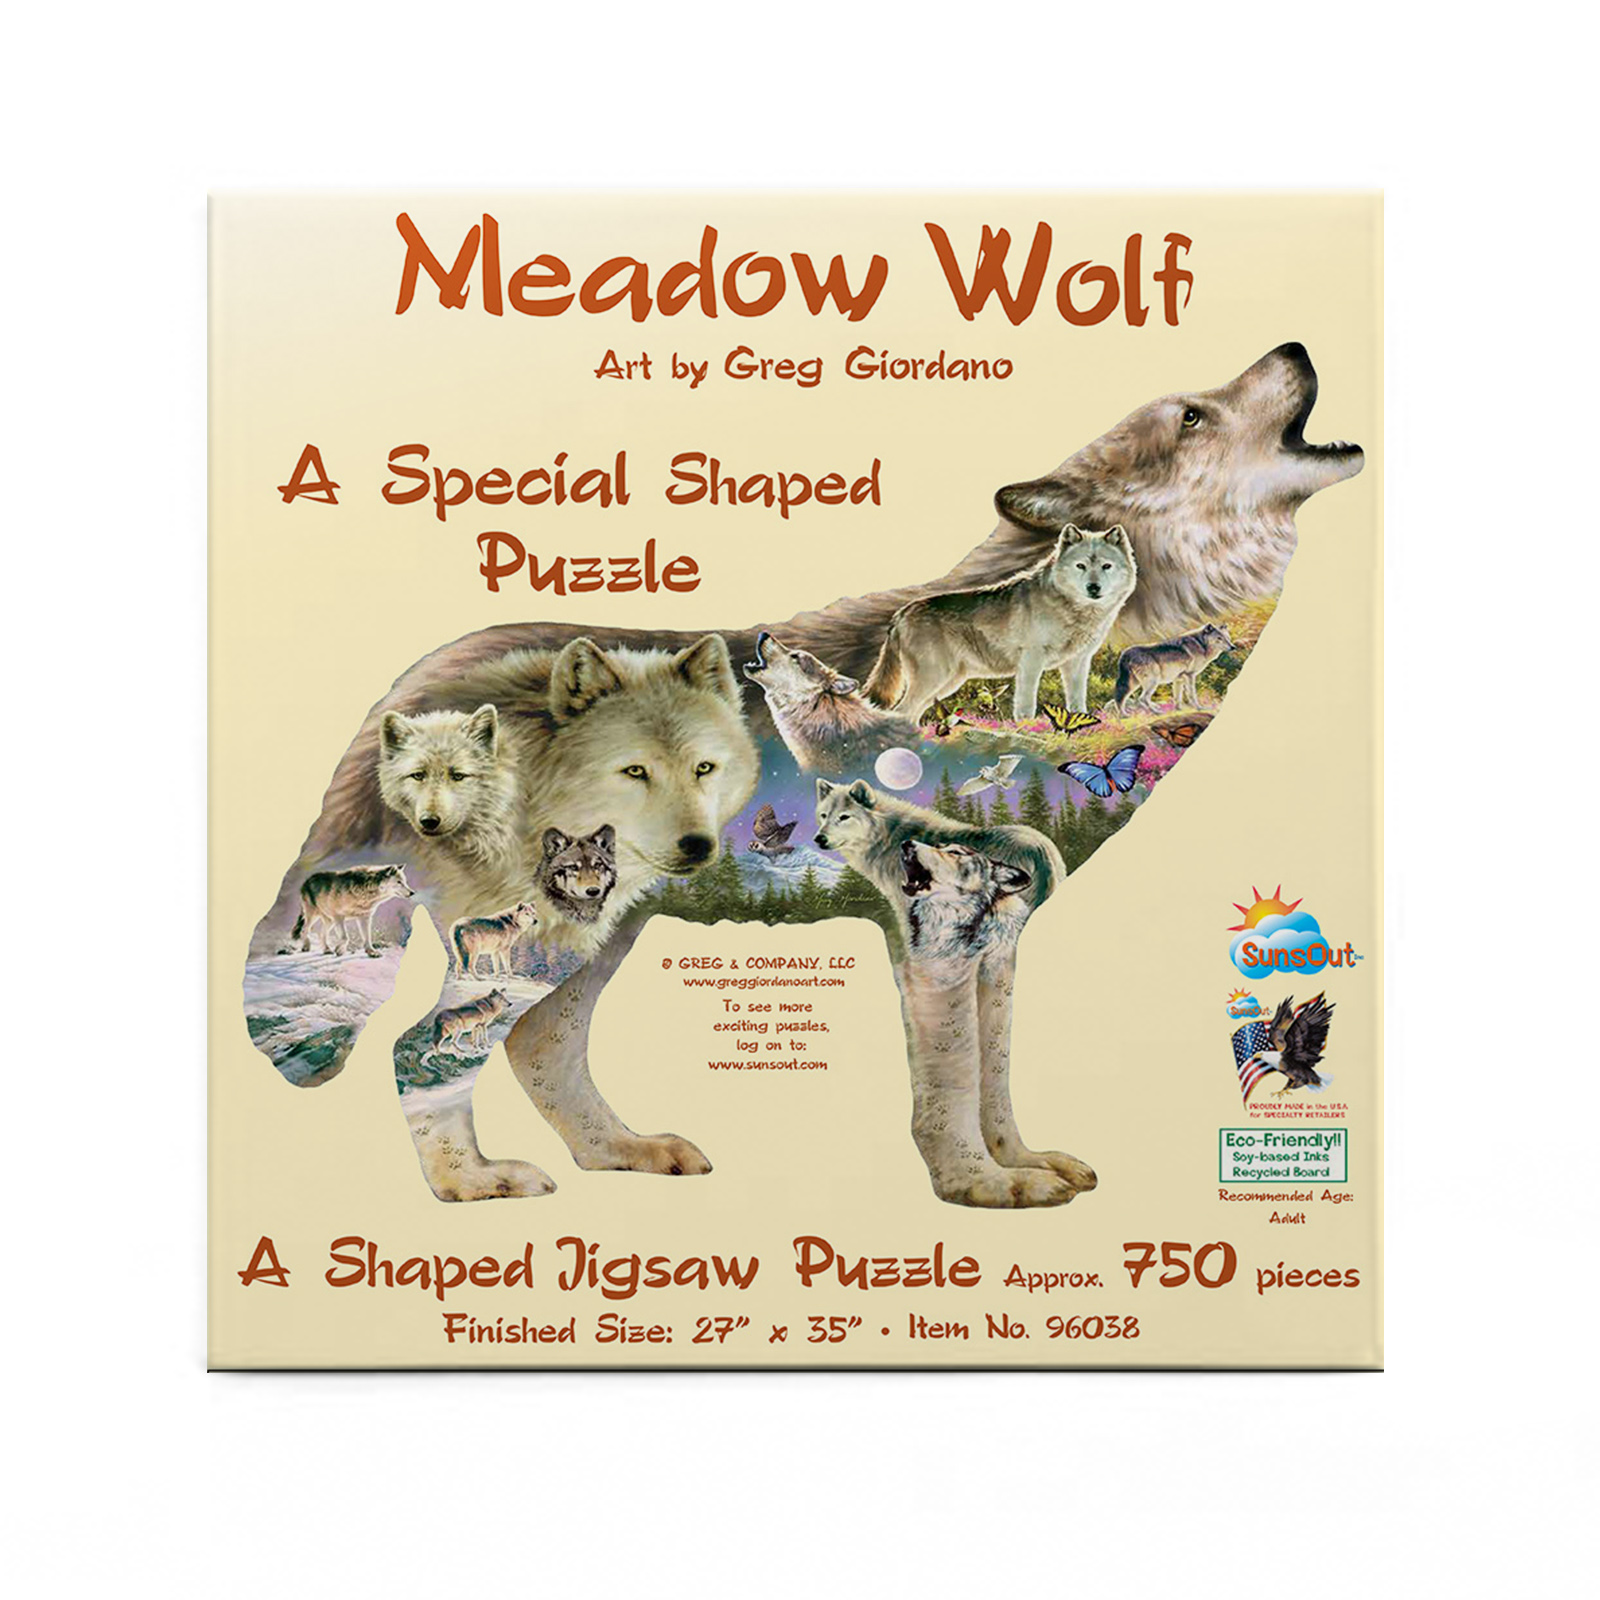 Meadow Wolf